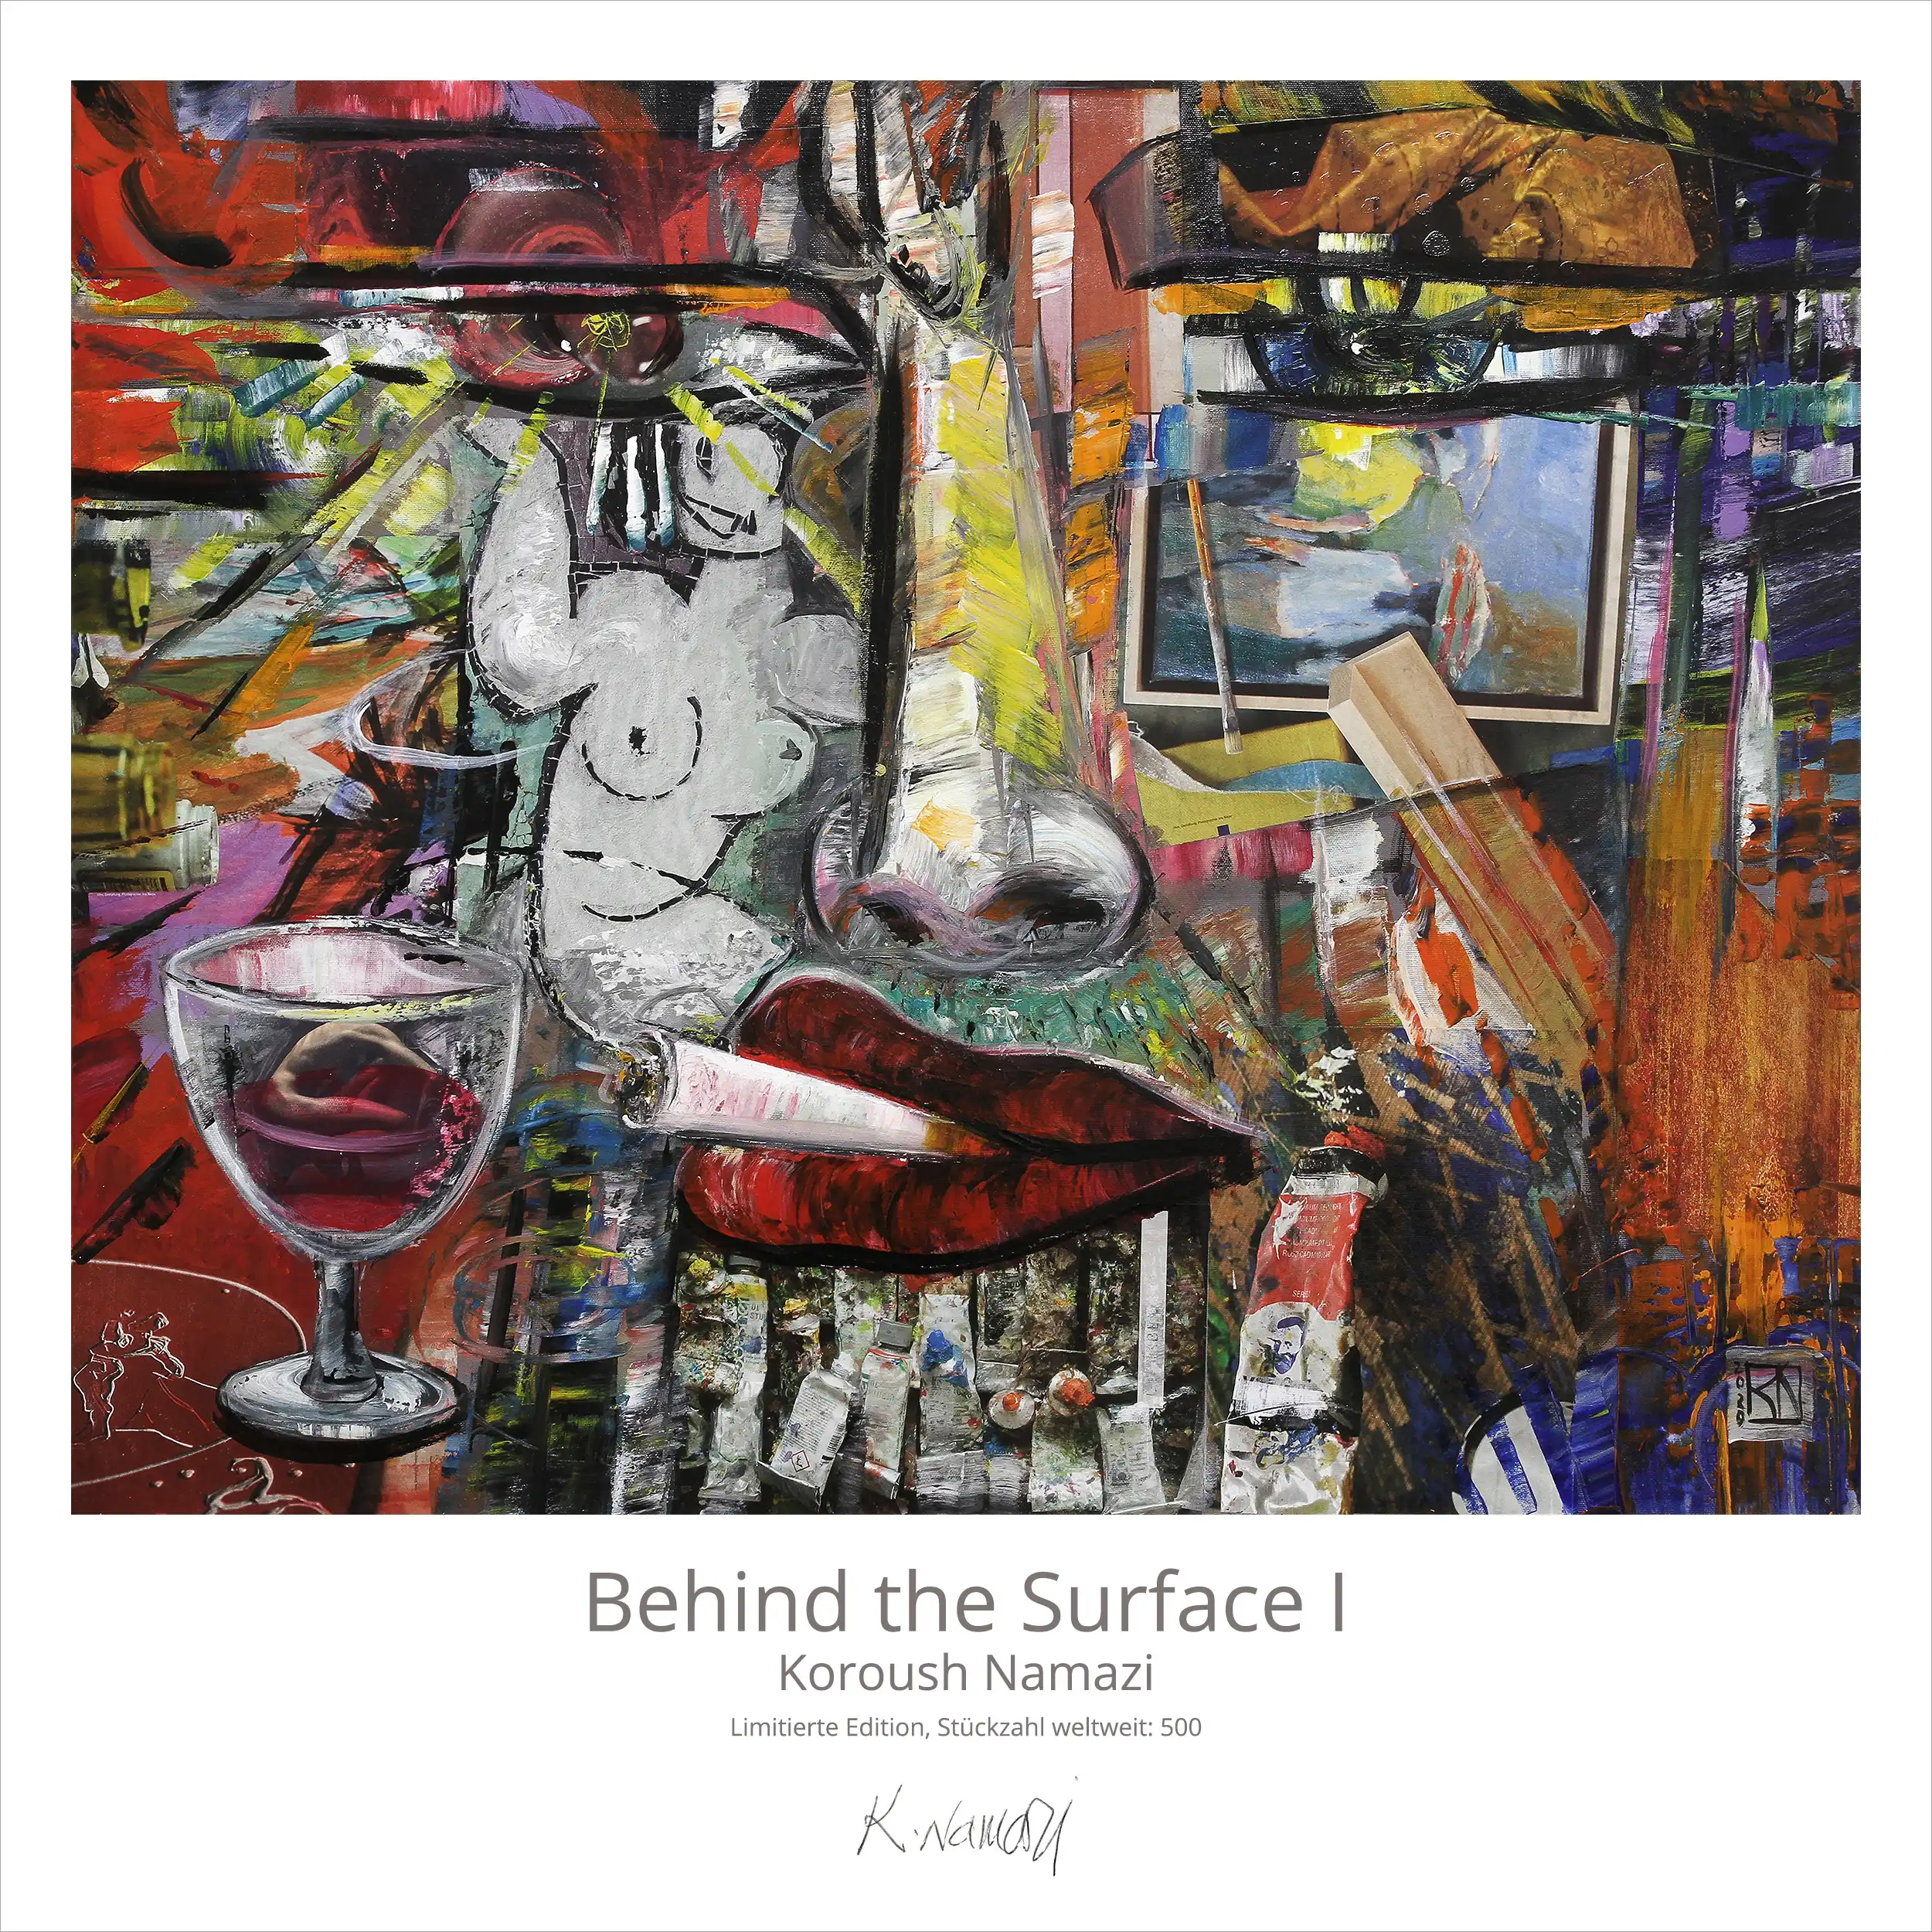 Limitierte Edition auf Papier, K. Namazi: "Behind the Surface I", Fineartprint, Kollektion E&K